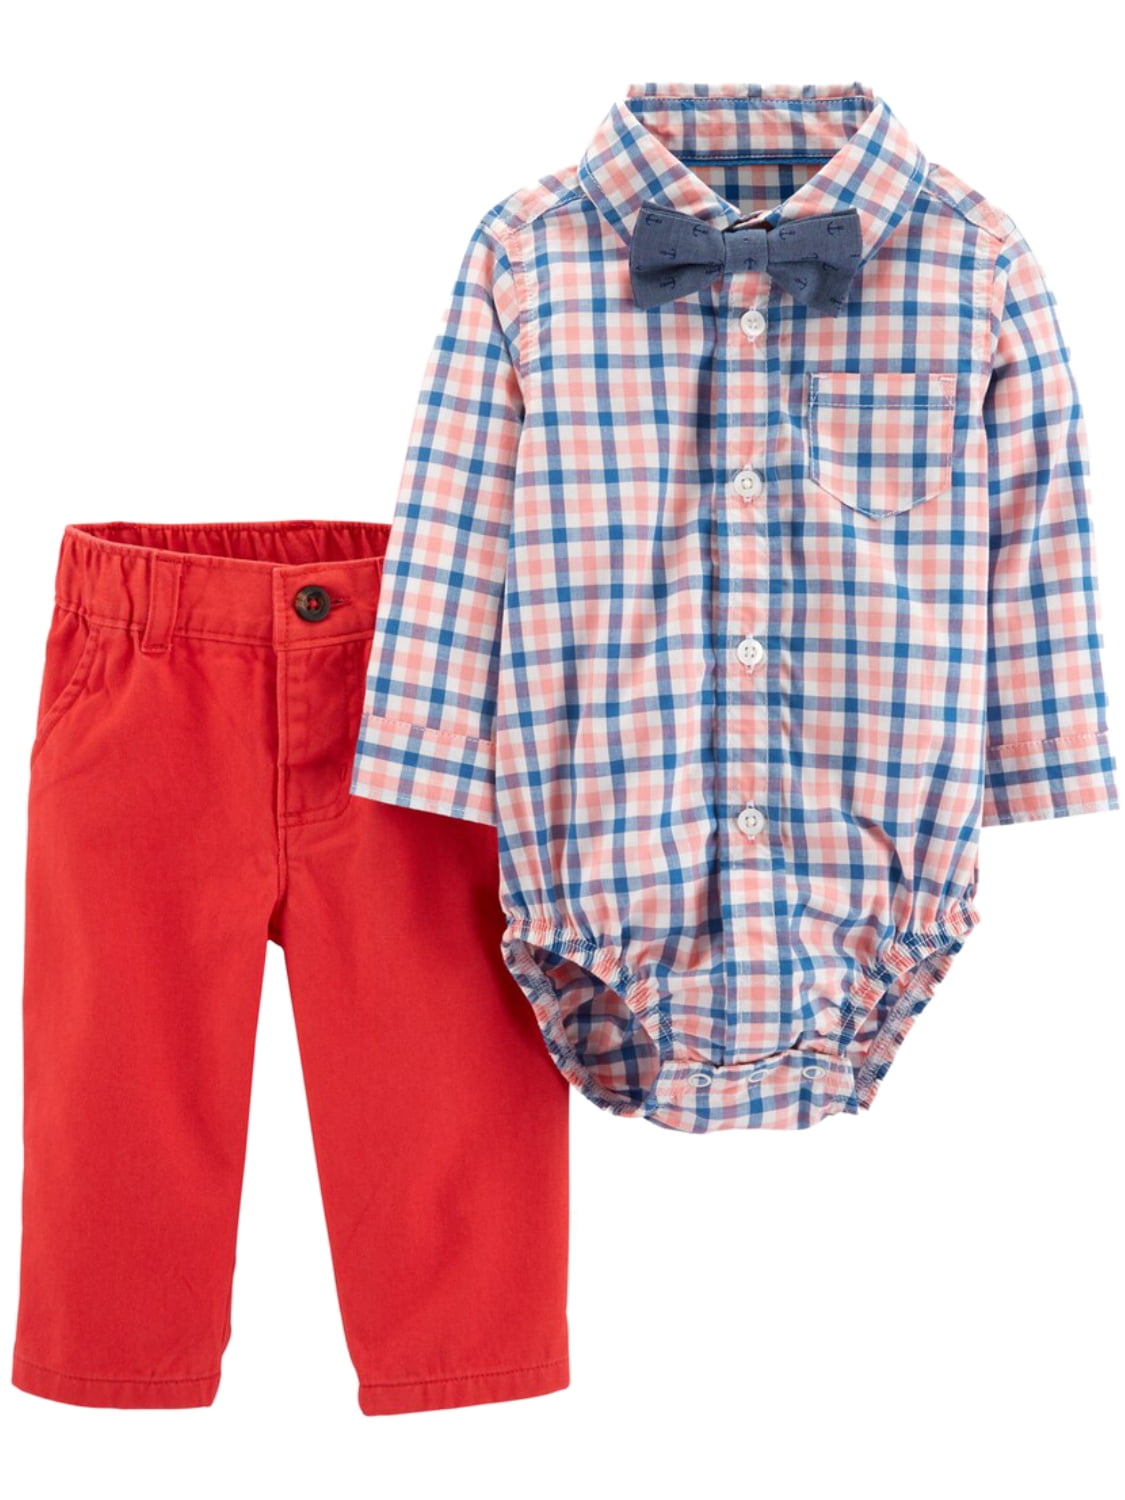 US Polo Assn Infant Boys Coral Bodysuit 2pc Shortall Set Size 3/6M 6/9M $32 